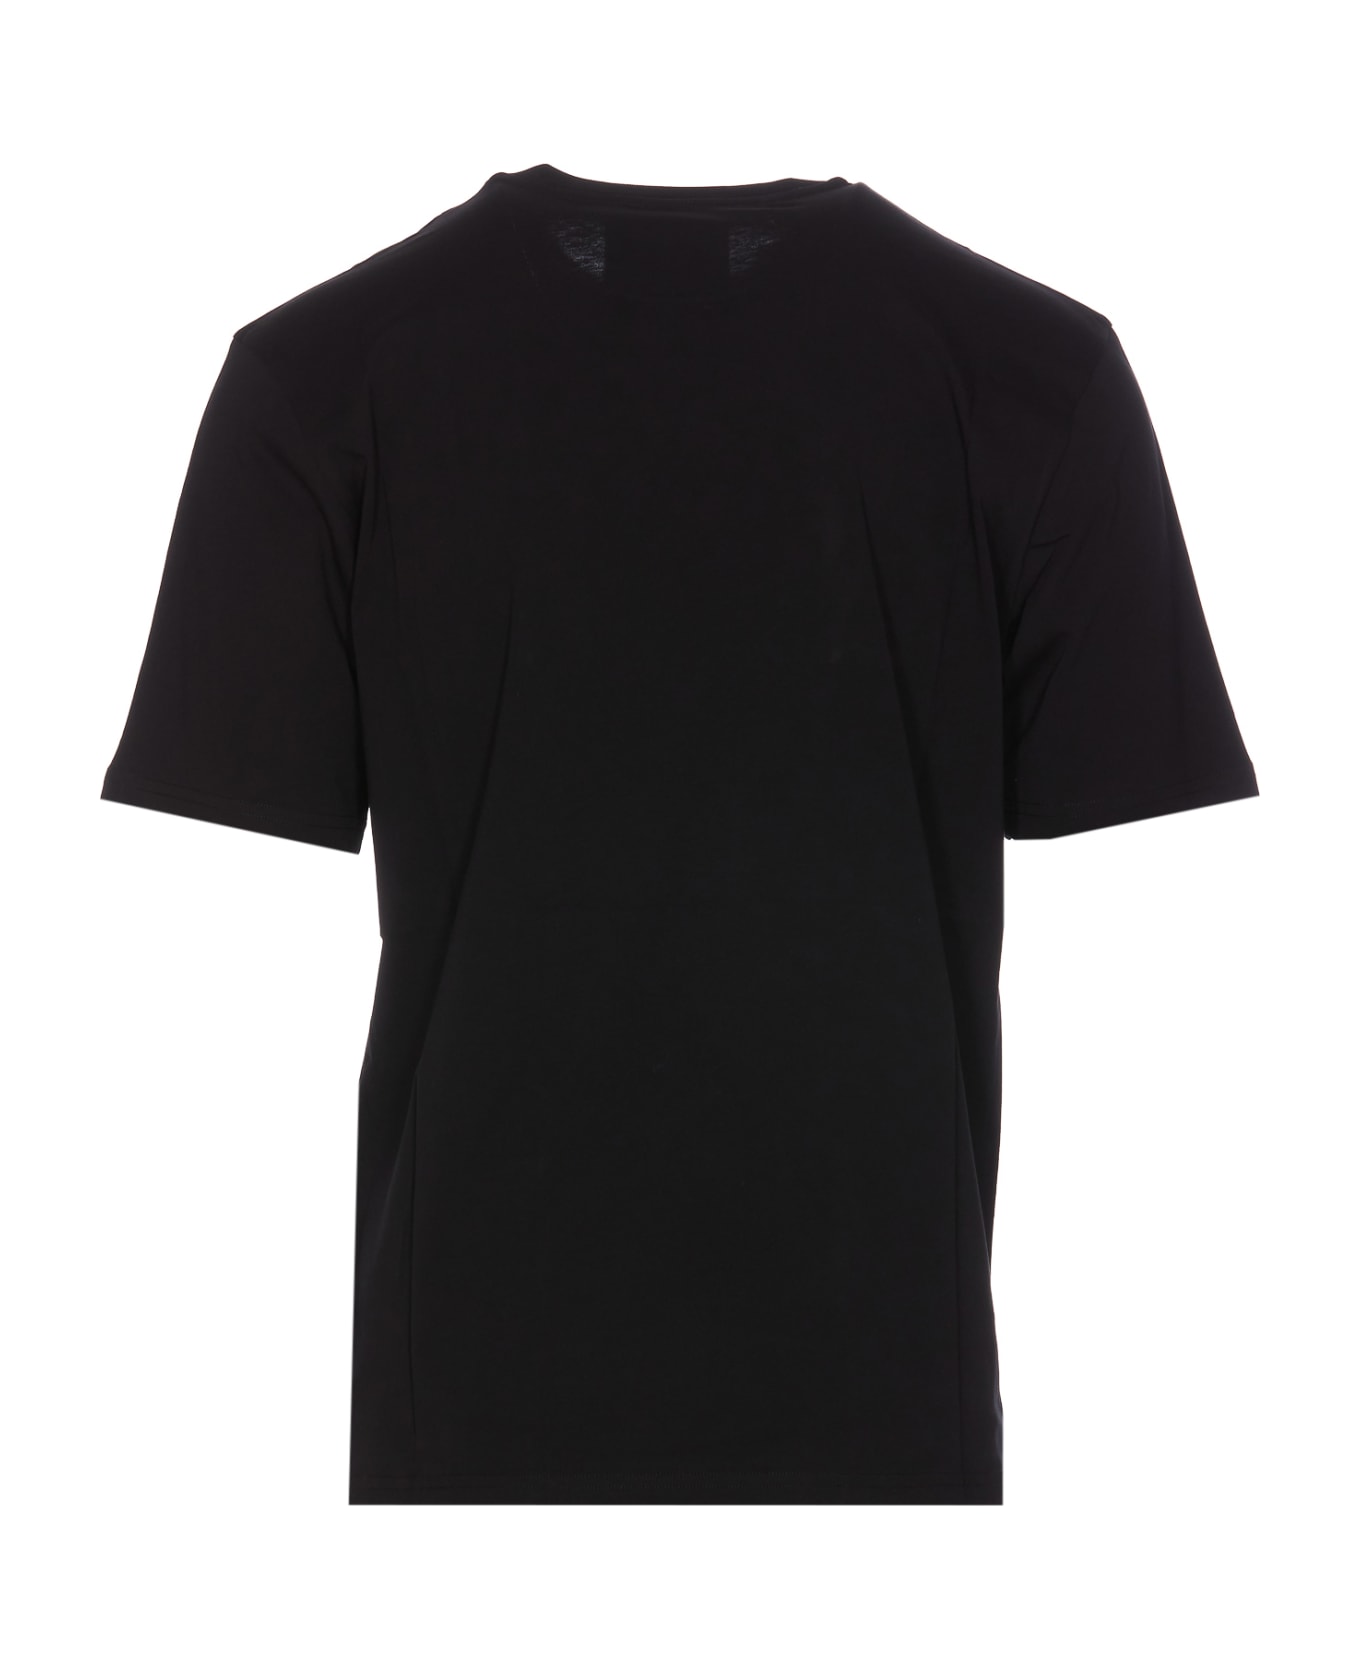 Moschino Drawn Teddy Bear T-shirt - BLACK シャツ